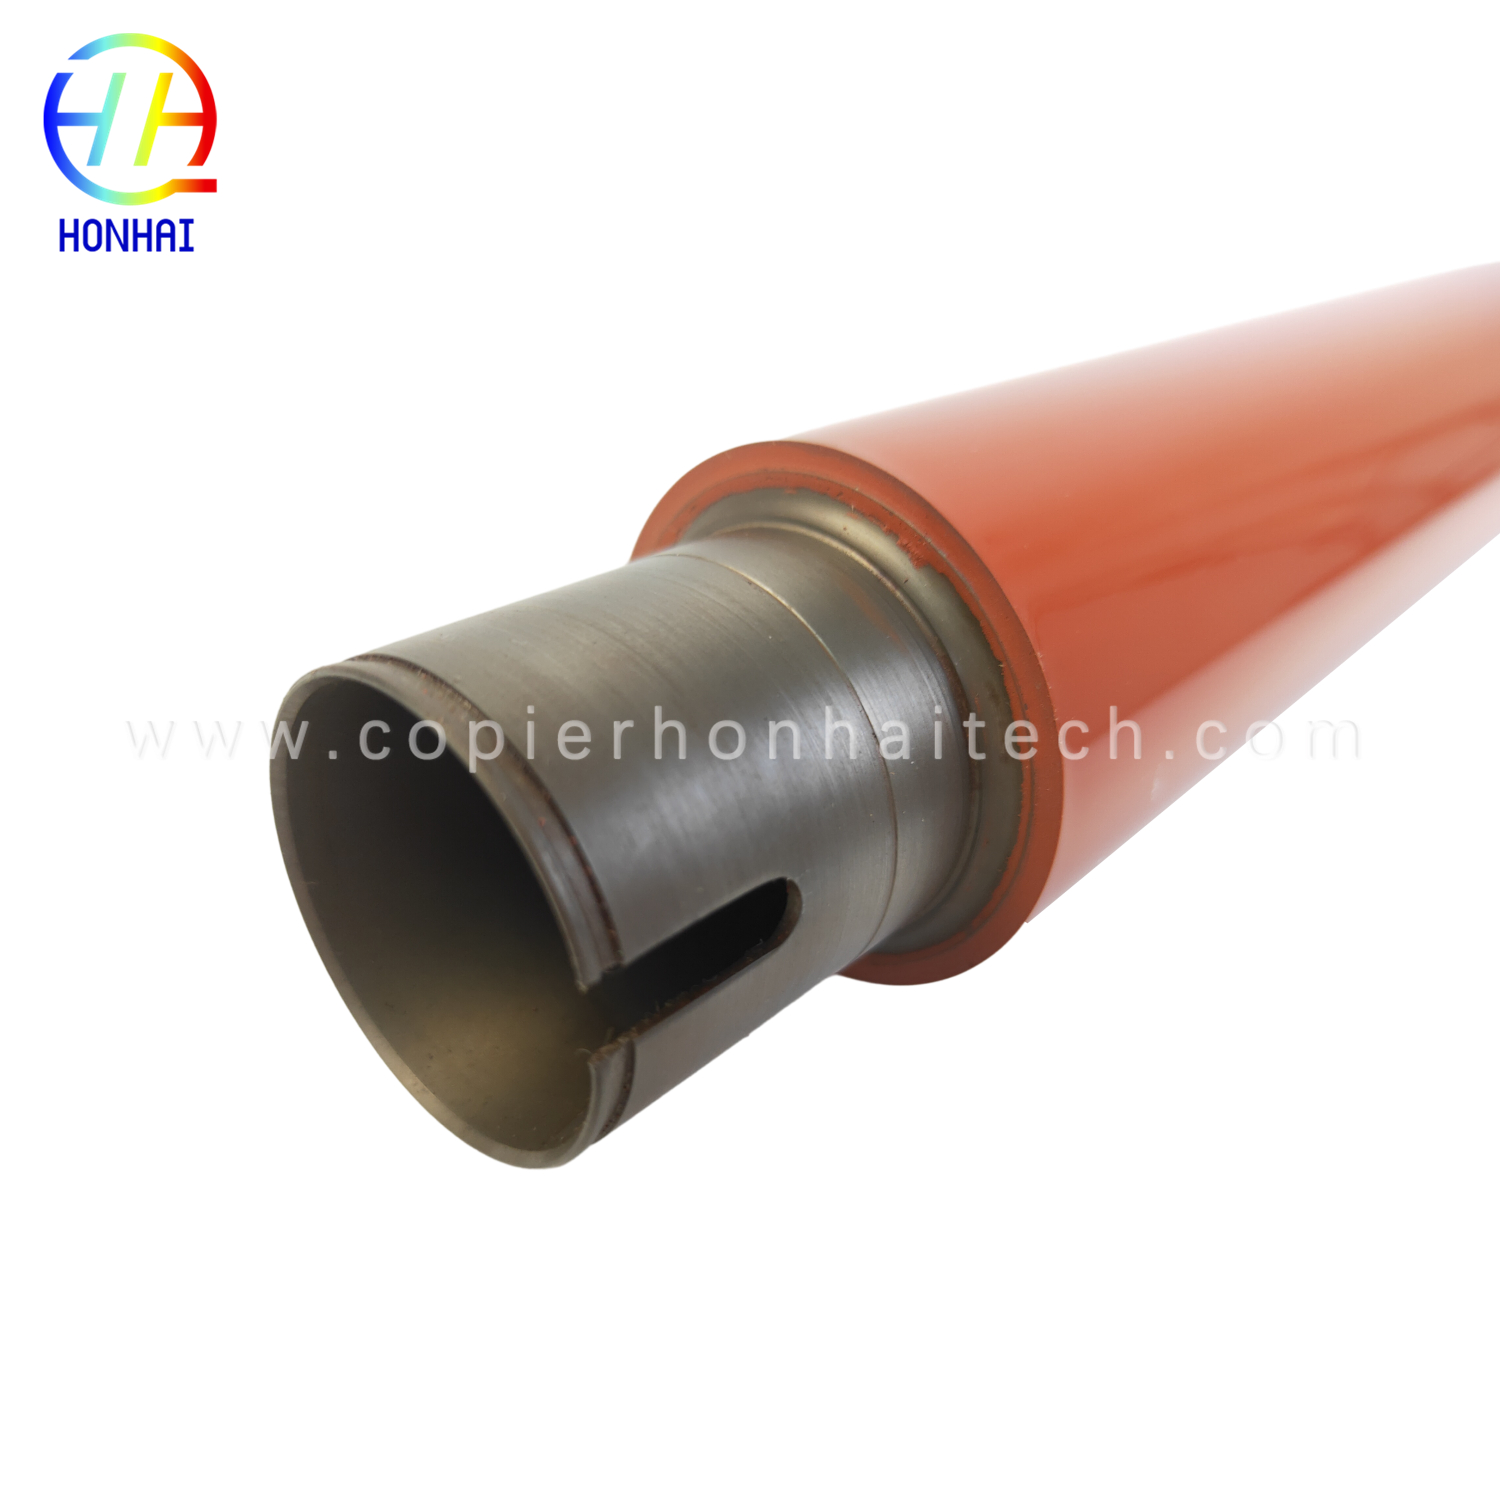 https://www.copierhonhaitech.com/oem-upper-fuser-heat-roller-for-sharp-nrollm1748fczz-mx-2600n-3100n-product/